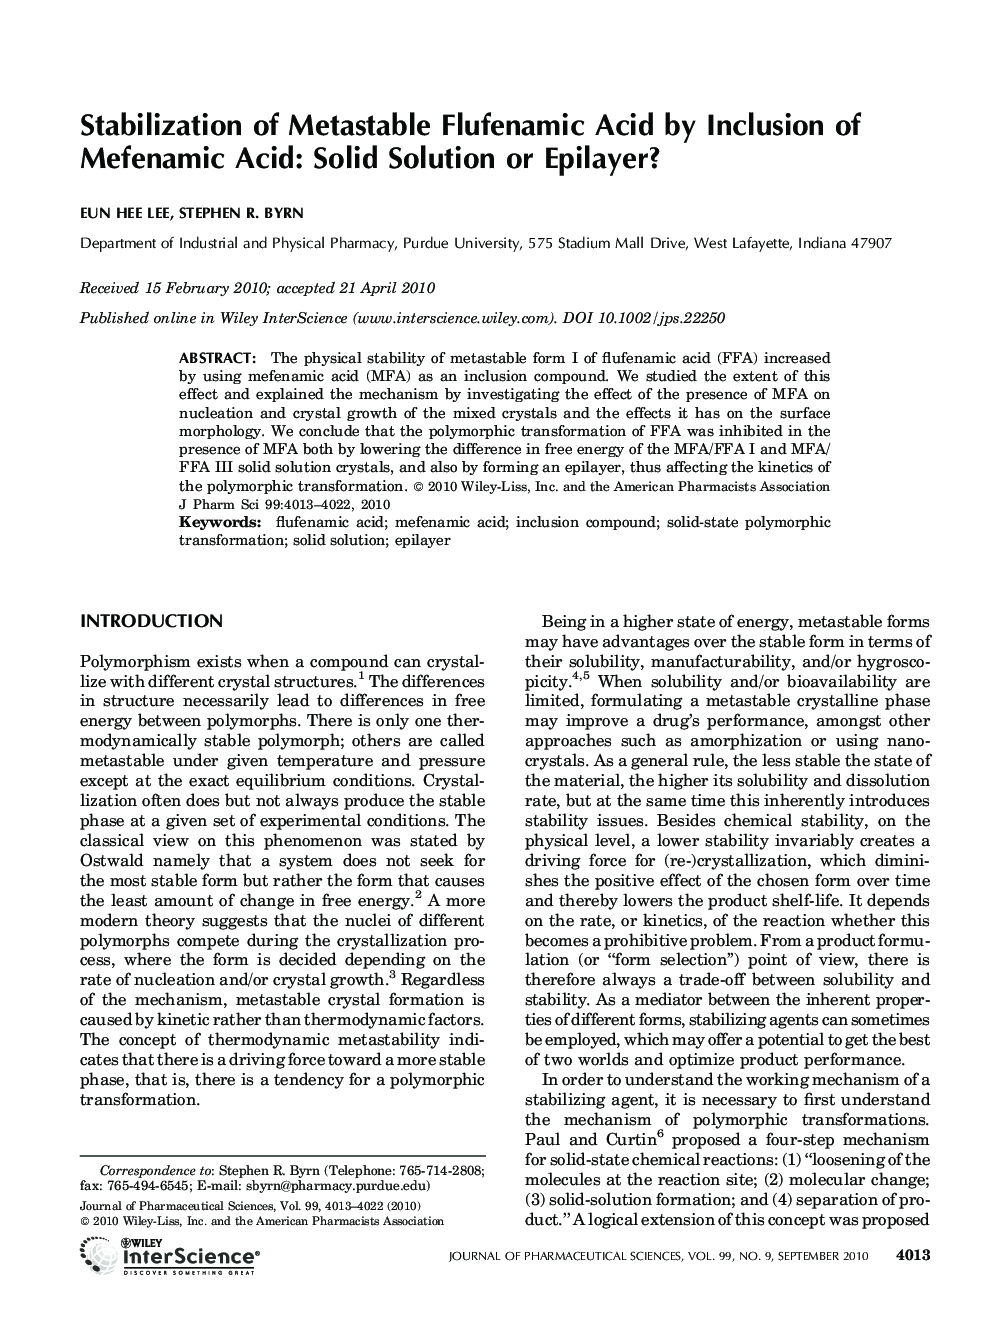 Stabilization of Metastable Flufenamic Acid by Inclusion of Mefenamic Acid: Solid Solution or Epilayer?